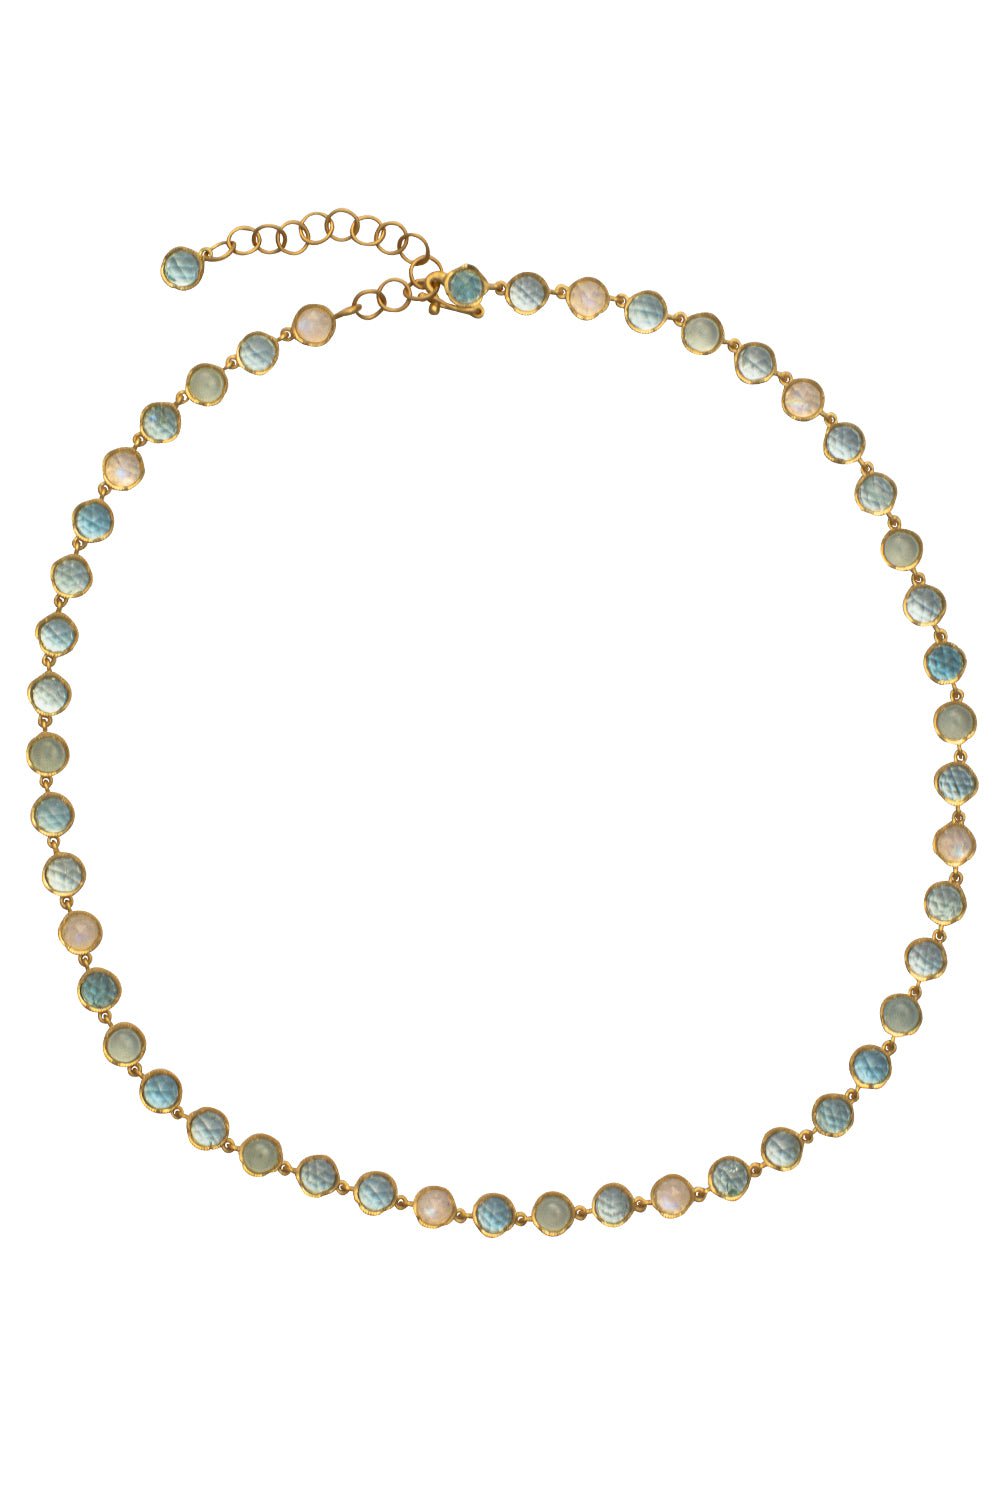 IRENE NEUWIRTH JEWELRY-Small Classic Link Aquamarine Moonstone Necklace-YELLOW GOLD